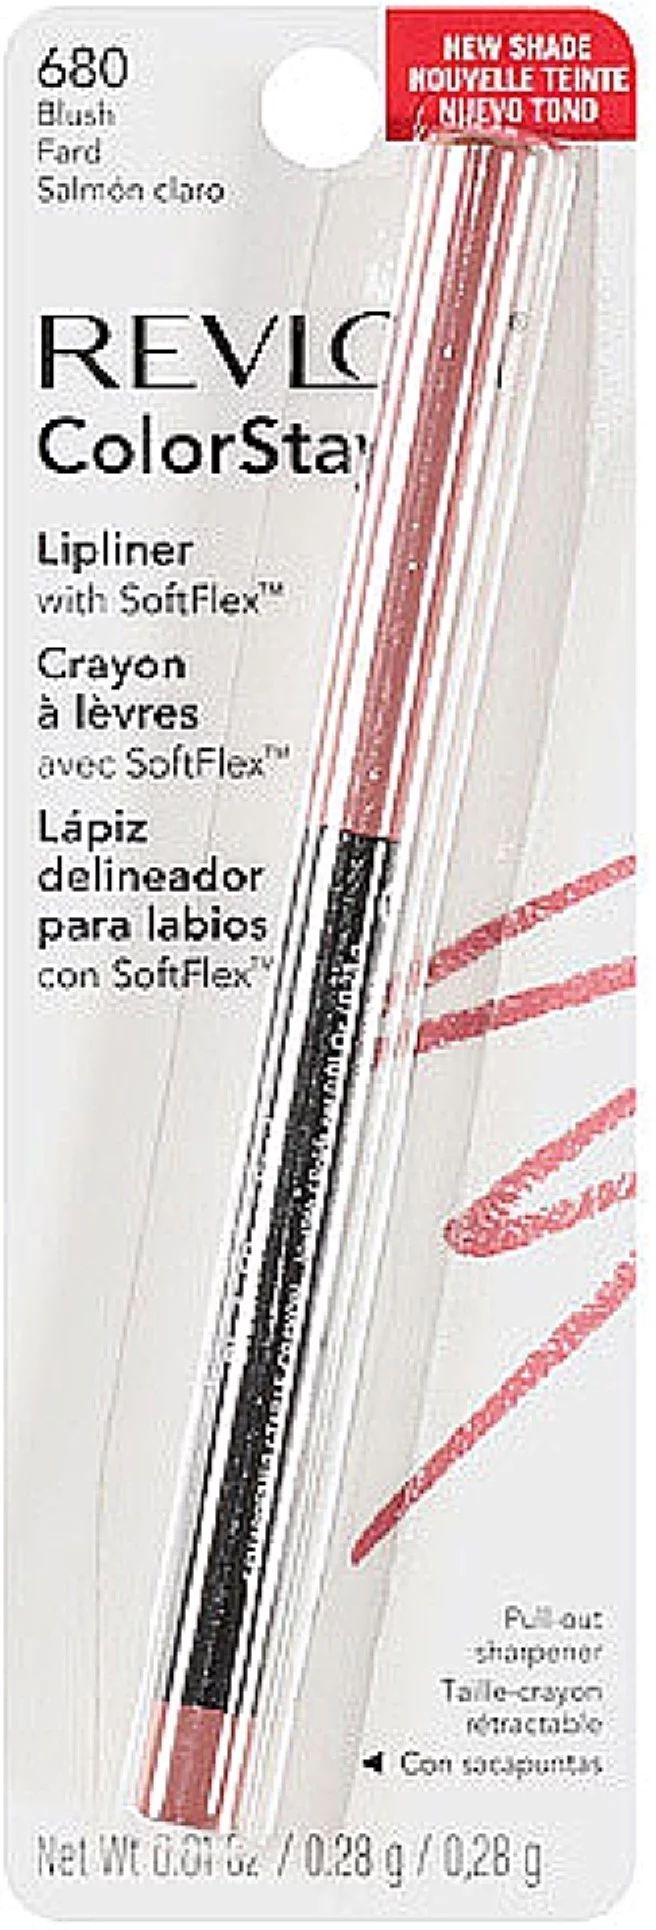 3 Pack - Revlon ColorStay Lip Liner with SoftFlex, Blush [680] 1 ea | Walmart (US)